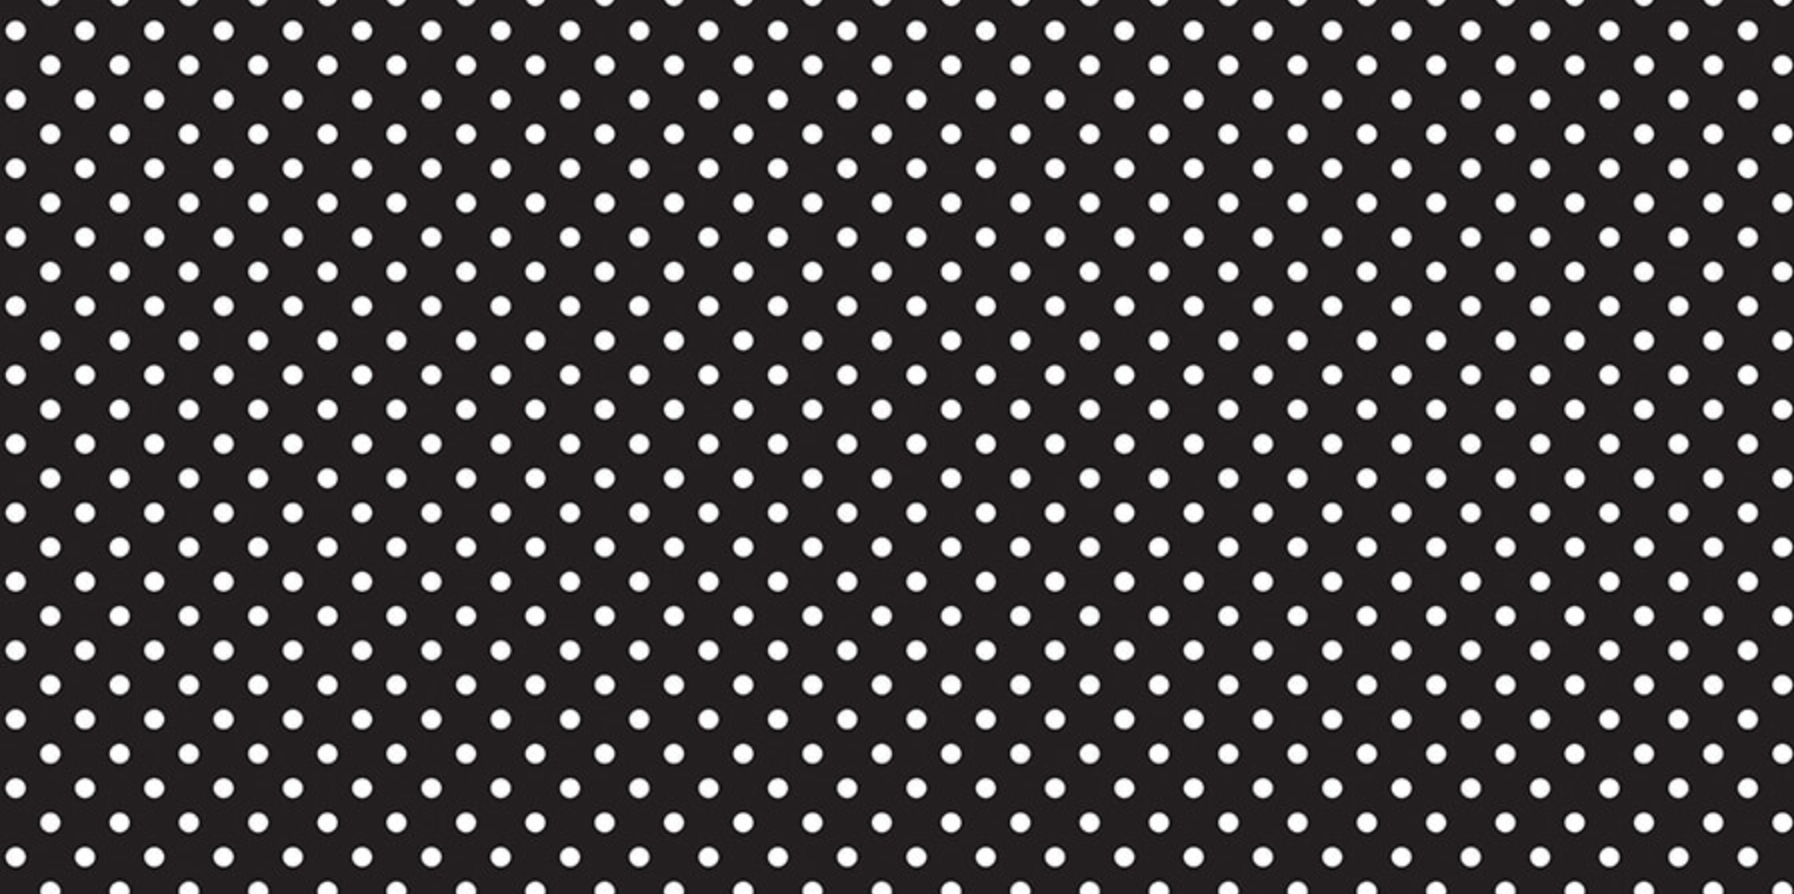 Schoolgirl Style - Classic Black & White Polka Dot 48X12 Primer Bullet